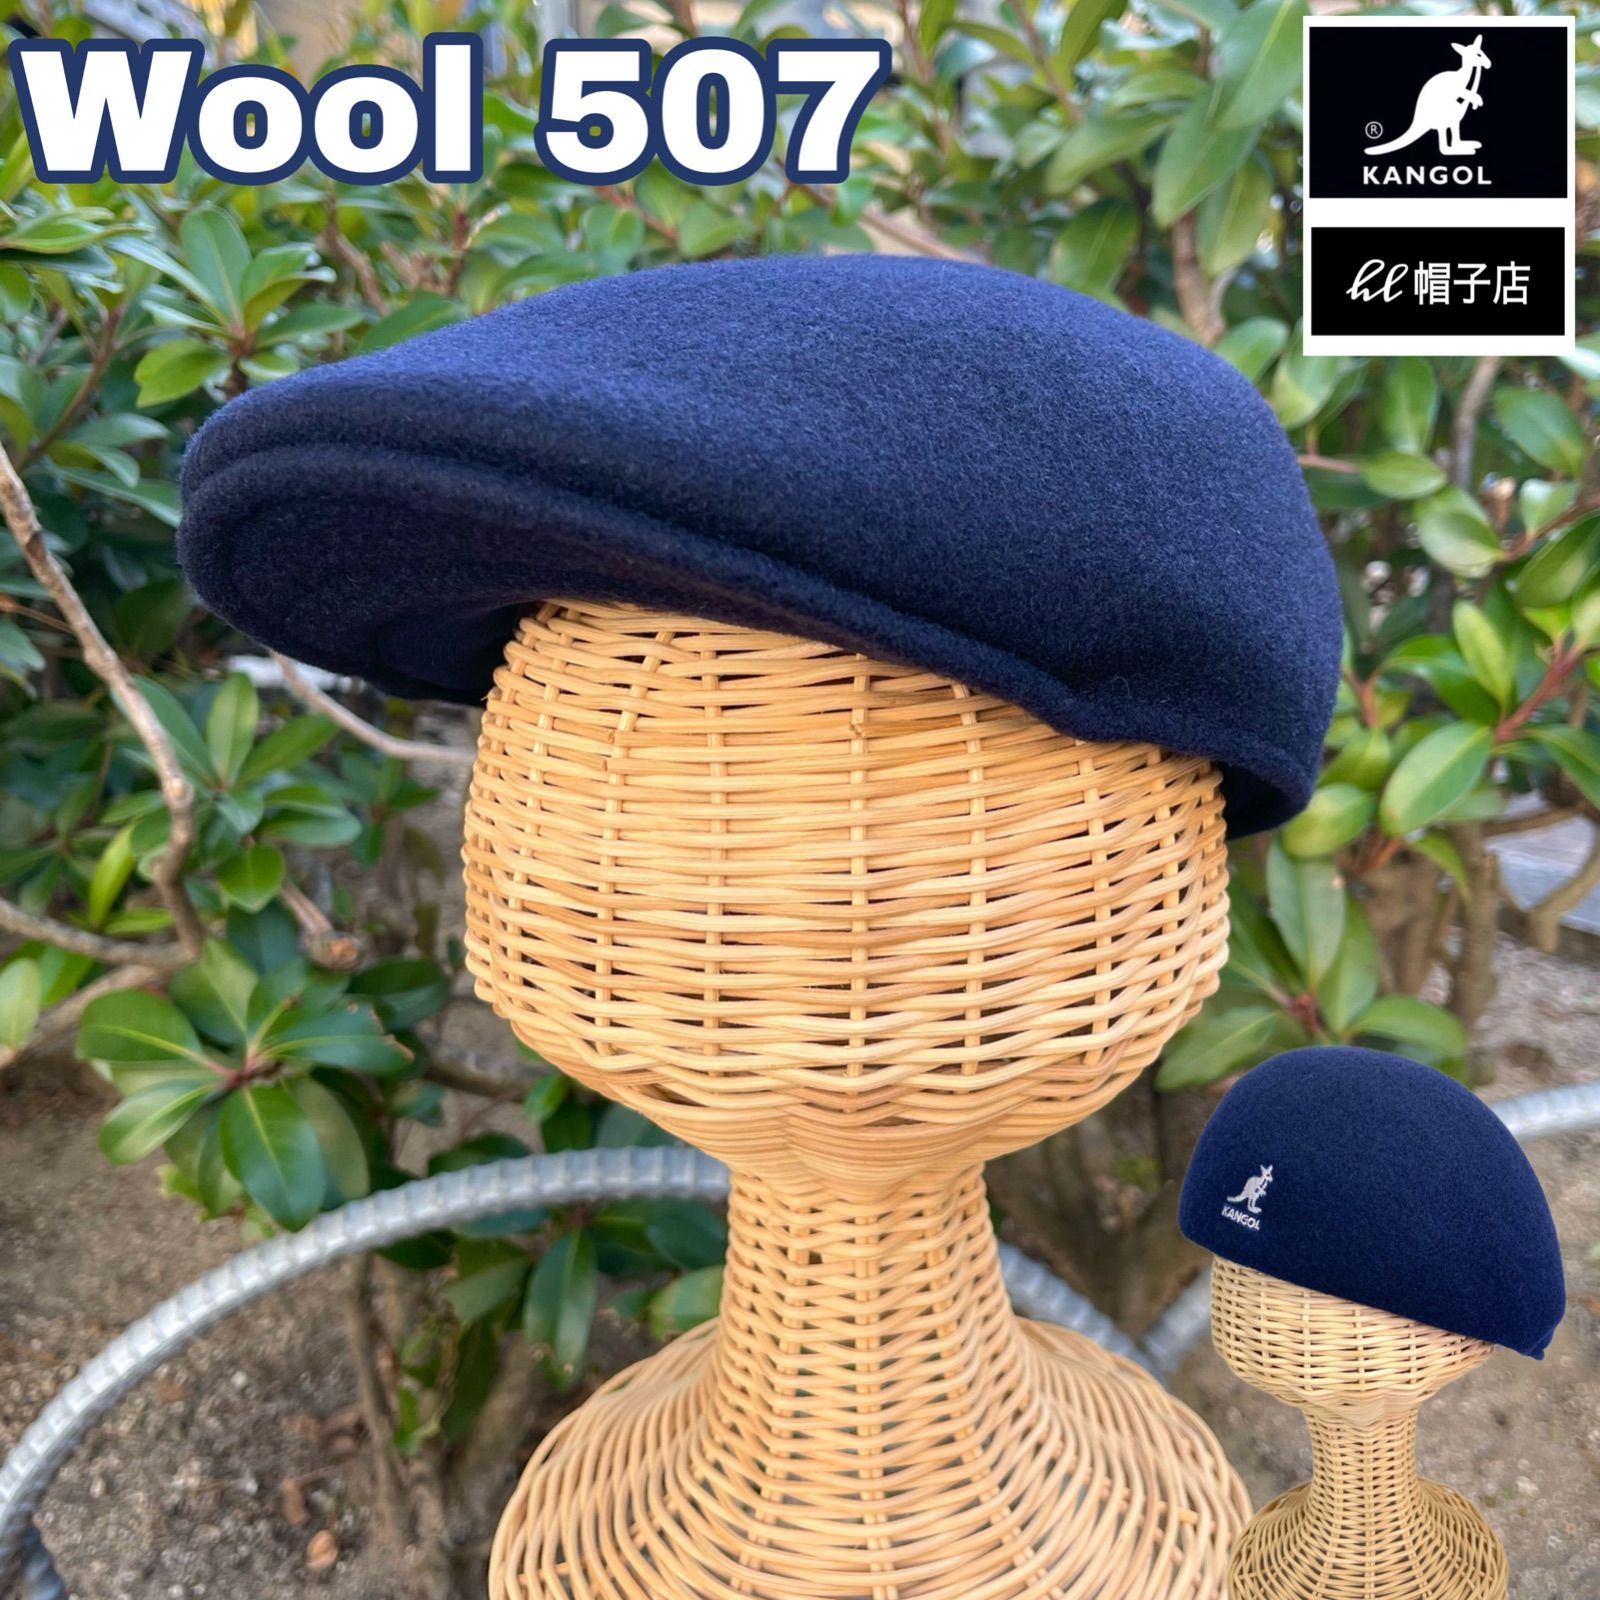 KANGOL買うならHL帽子SALE??KANGOL Wool 507 ウール素材 Black Mサイズ